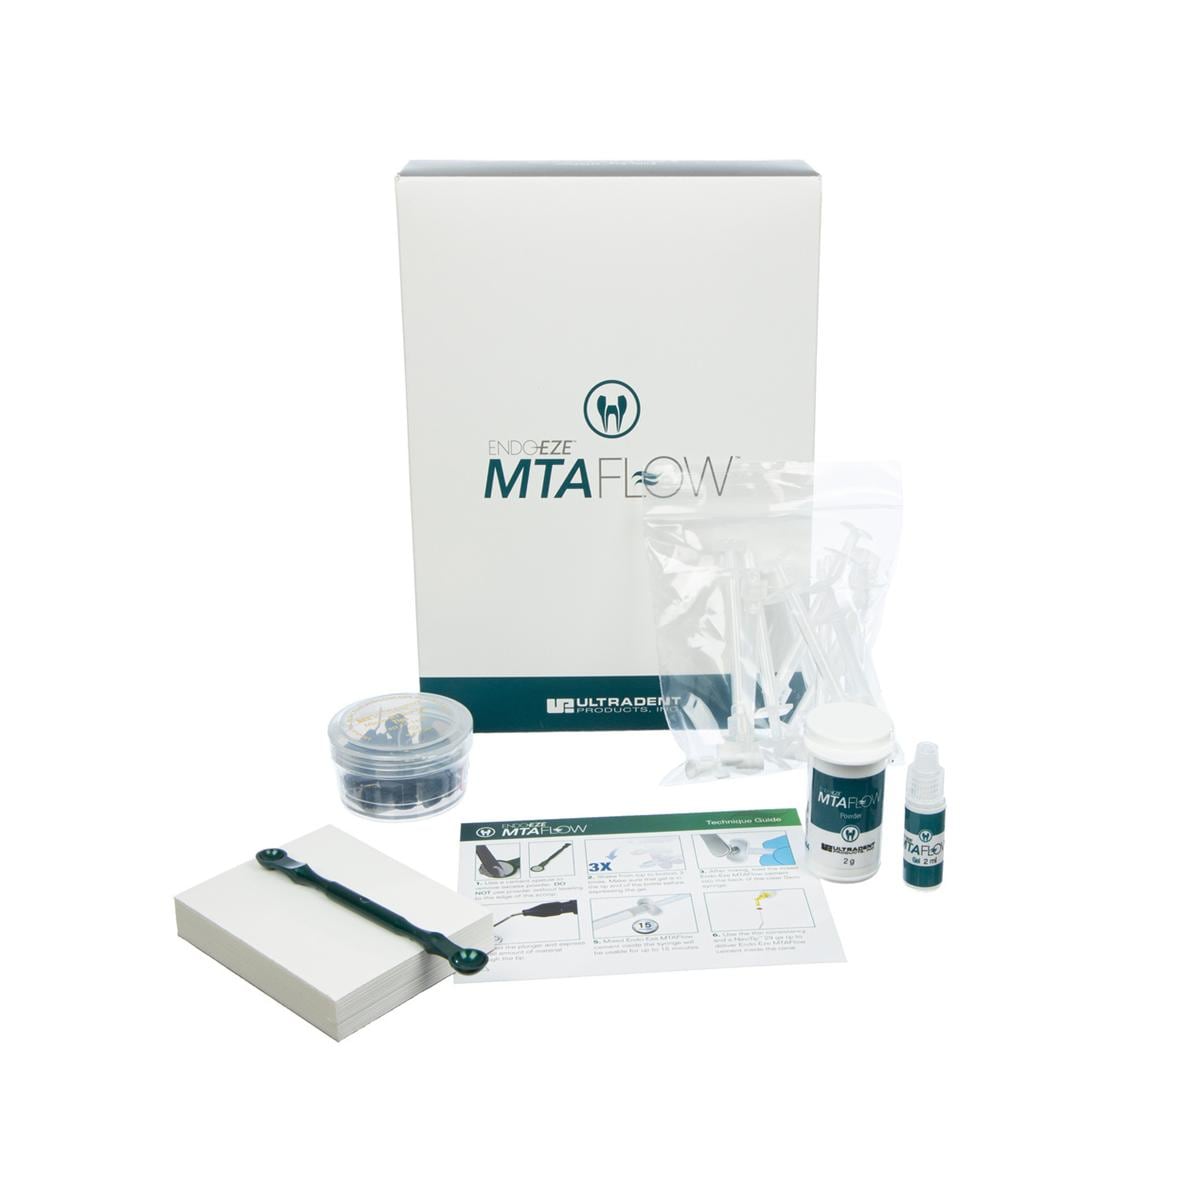 MTAFlow Kit - UPI 3980-1